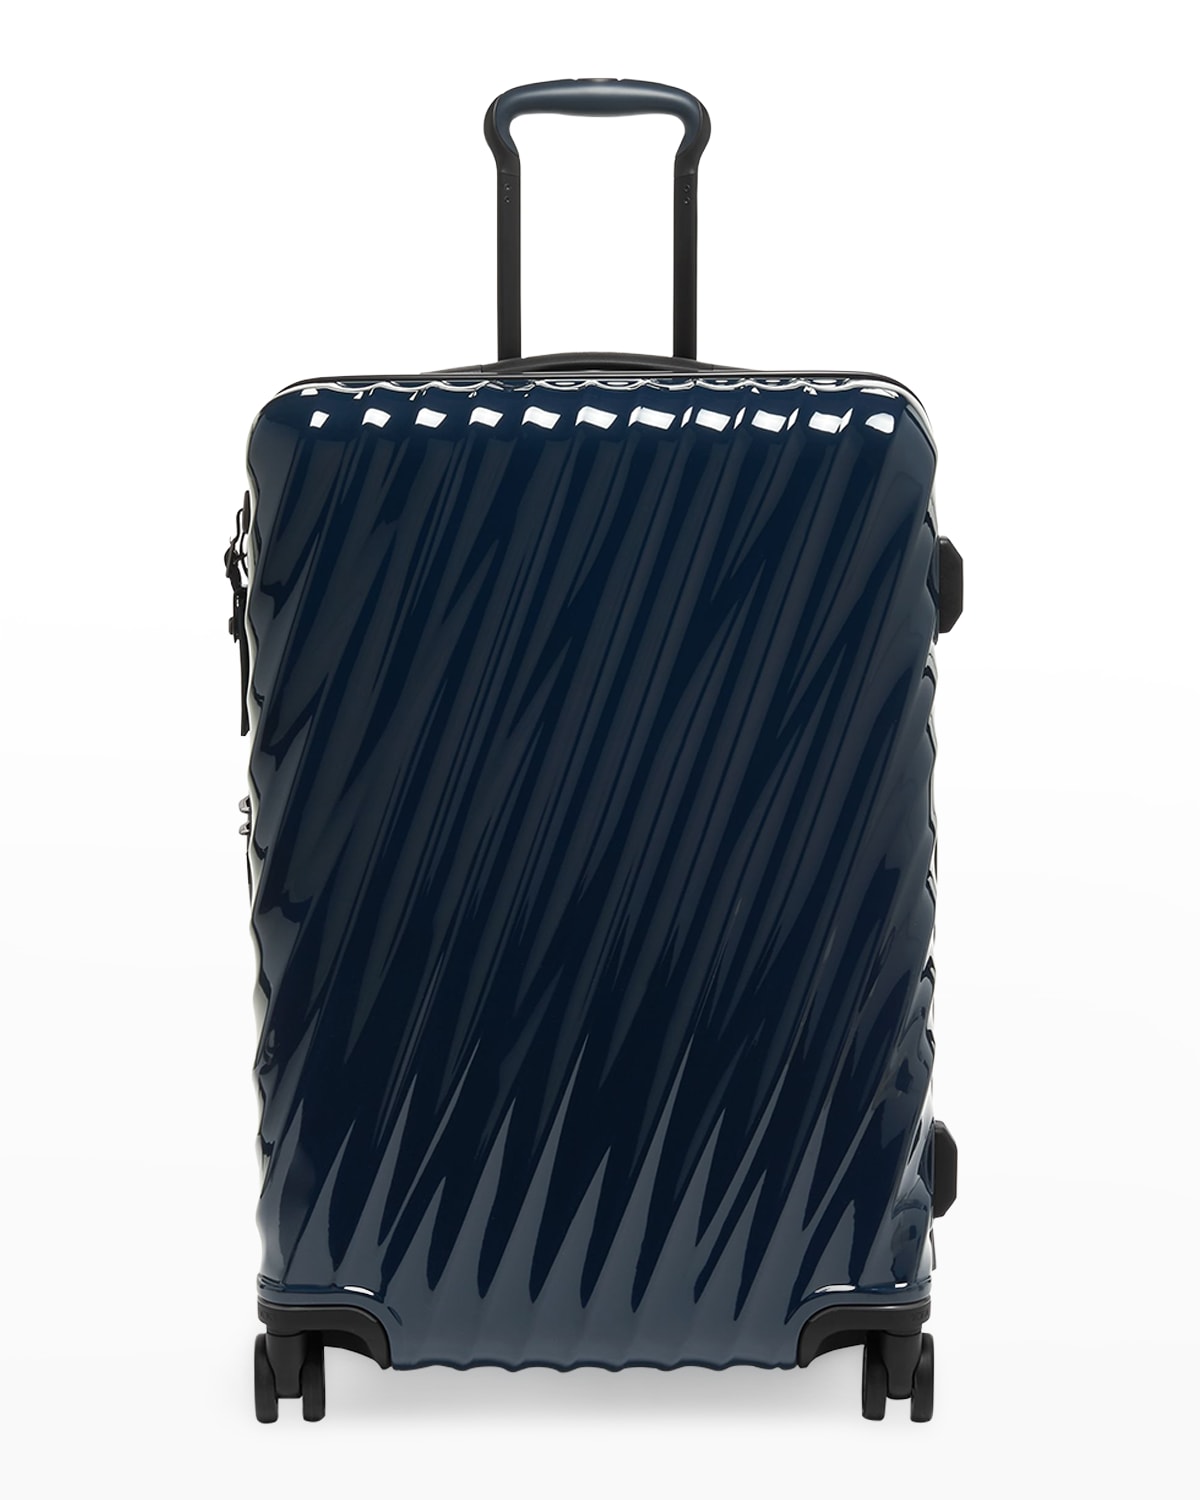 TUMI International Expandable 4-Wheel Carry On Luggage | Neiman Marcus